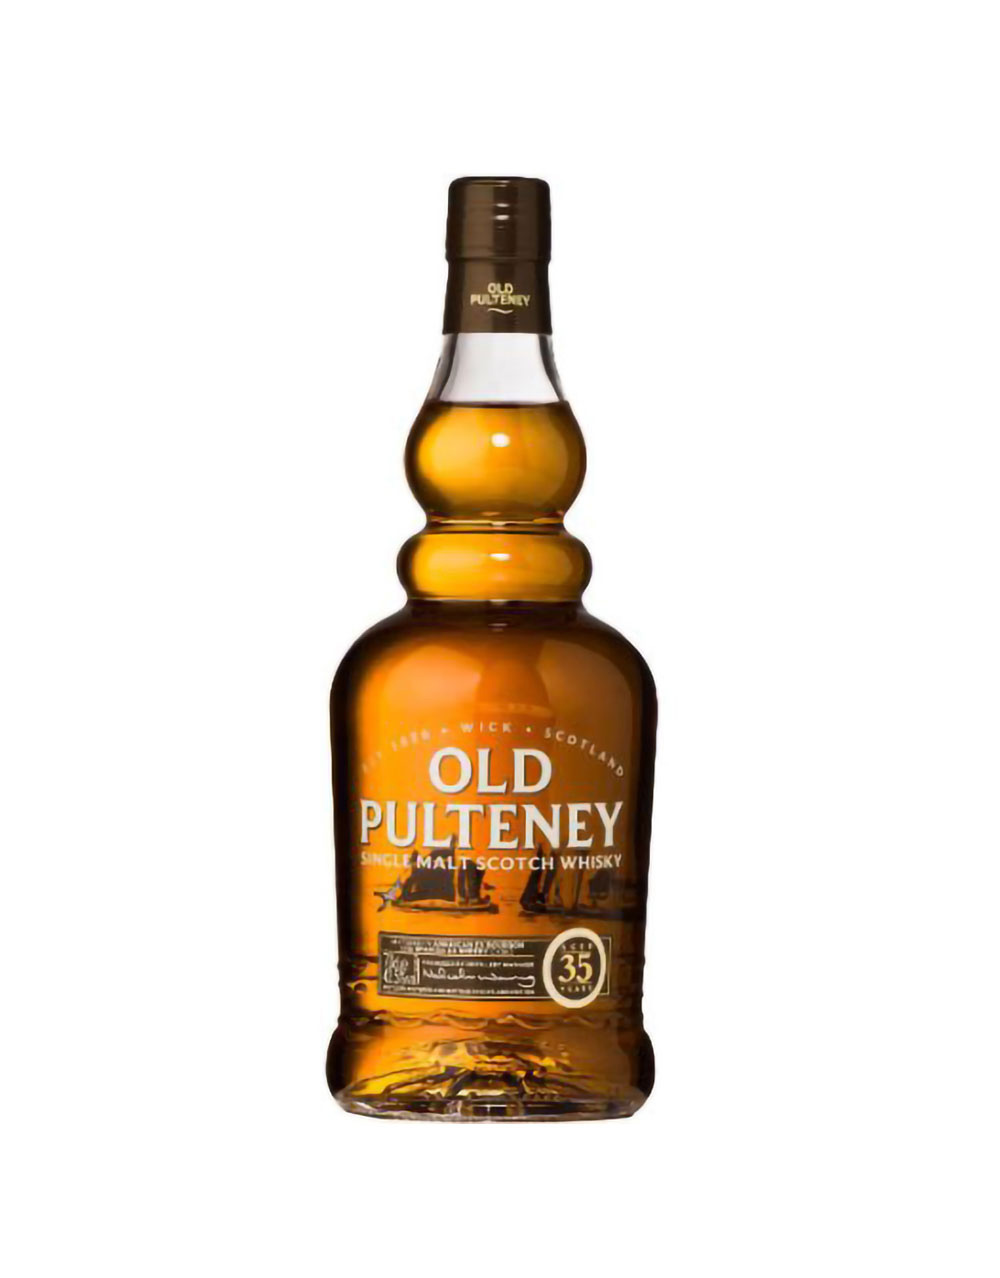 Old Pulteney 35 Year Old Single Malt Scotch Whisky